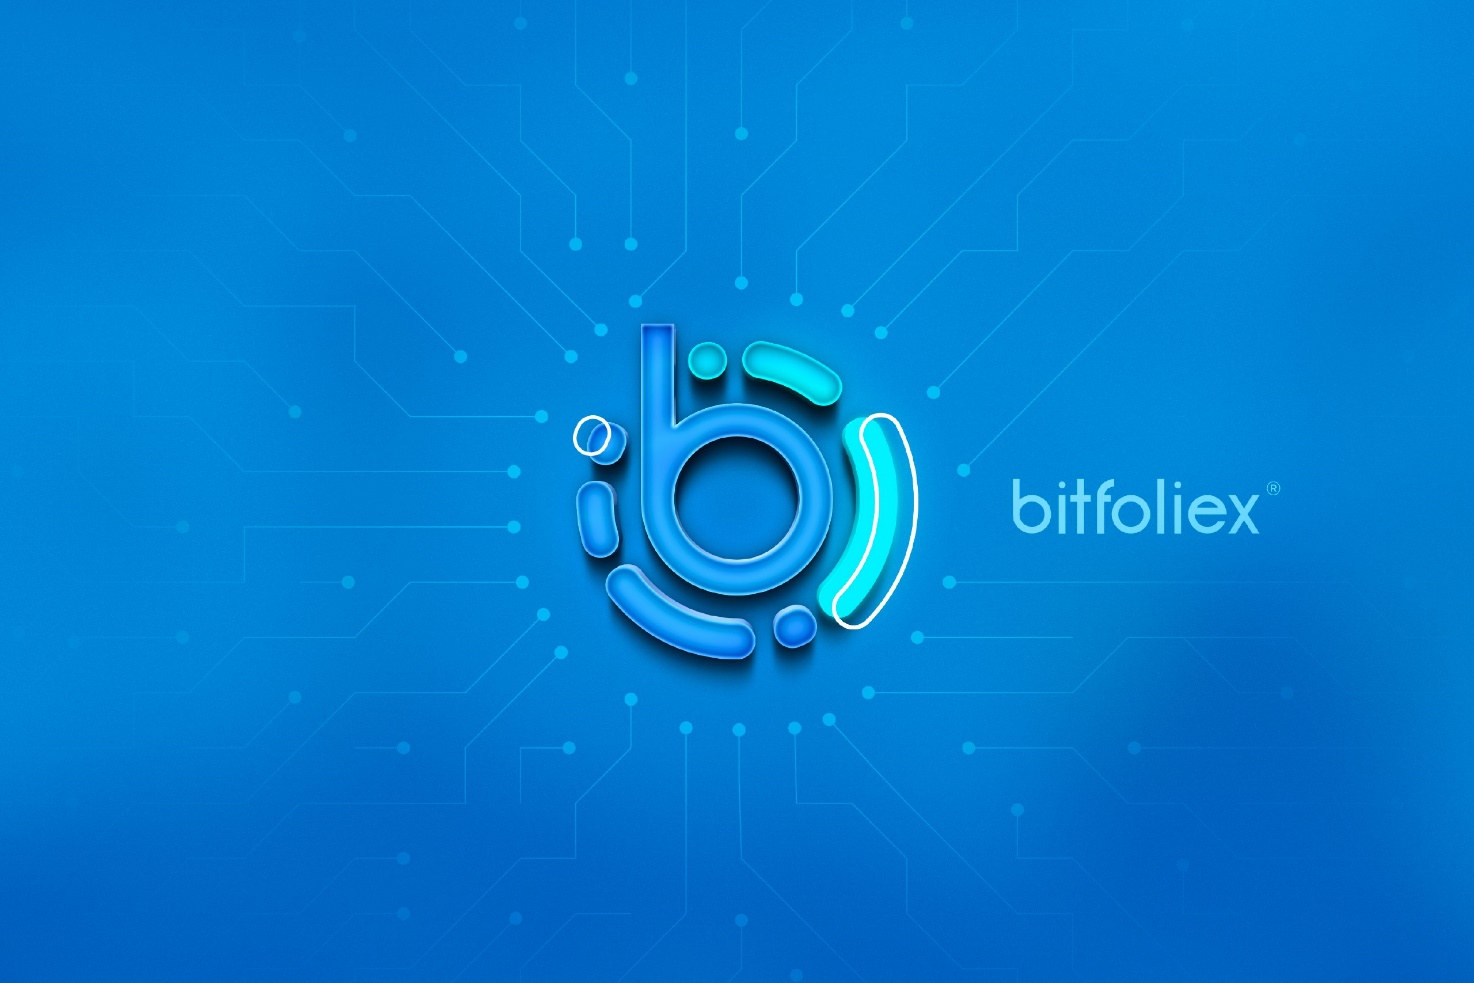 Bitfoliex, Monday, April 27, 2020, Press release picture